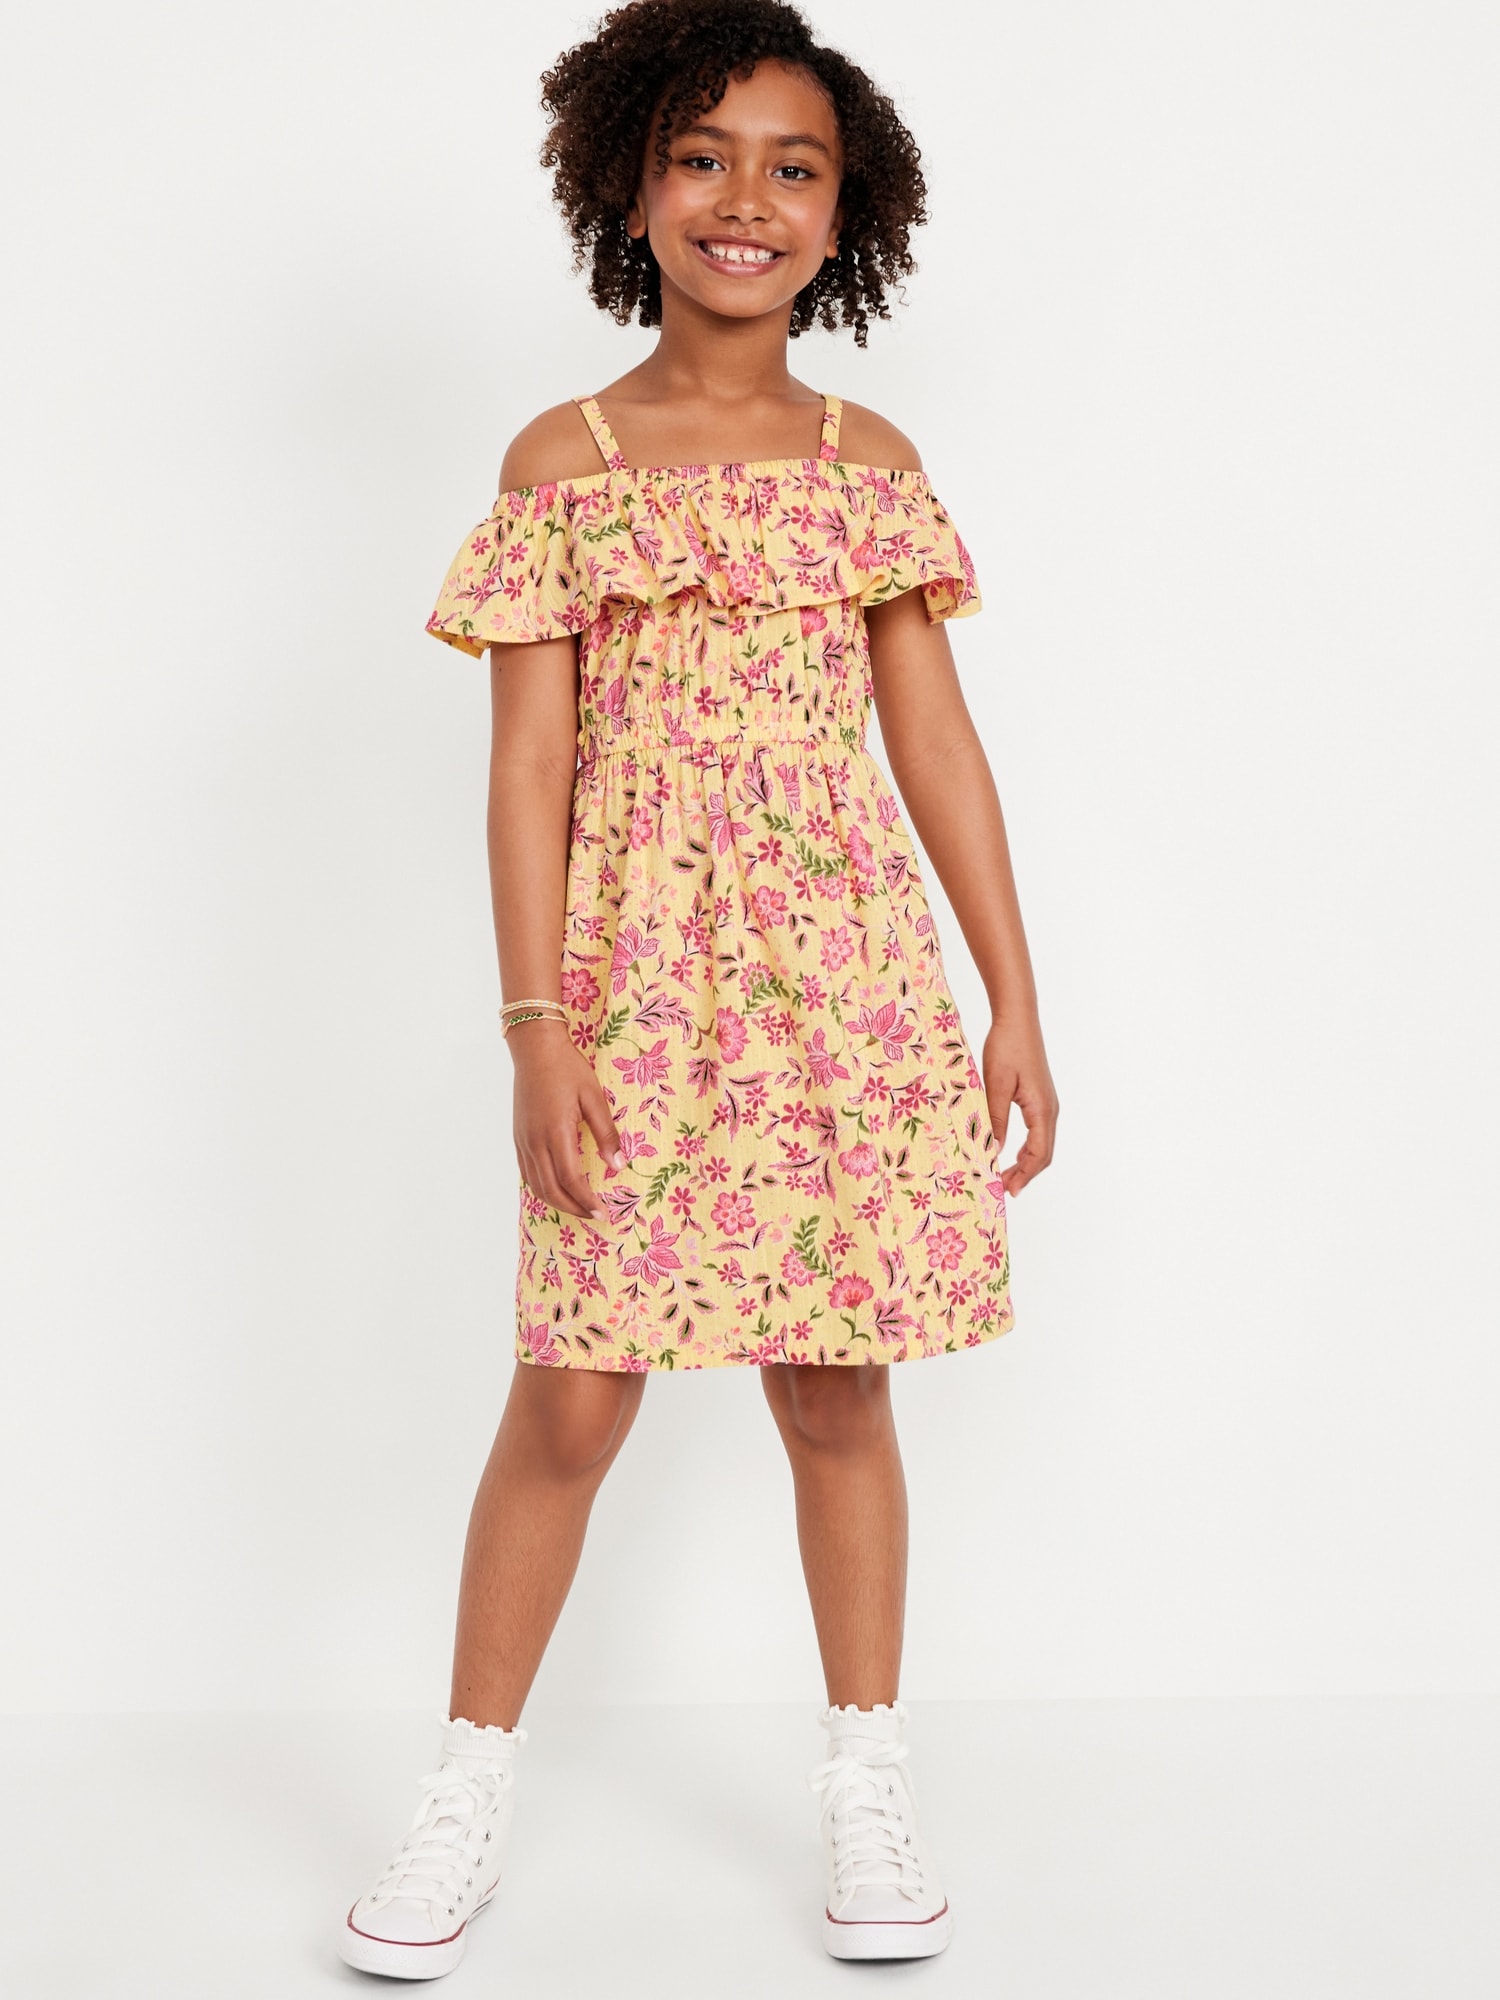 Off Shoulder Princess Dress For Toddler Girls Suspender, Solid Color,  Summer Kids Clothing Stores DW5295 From China1zhan, $8.67 | DHgate.Com